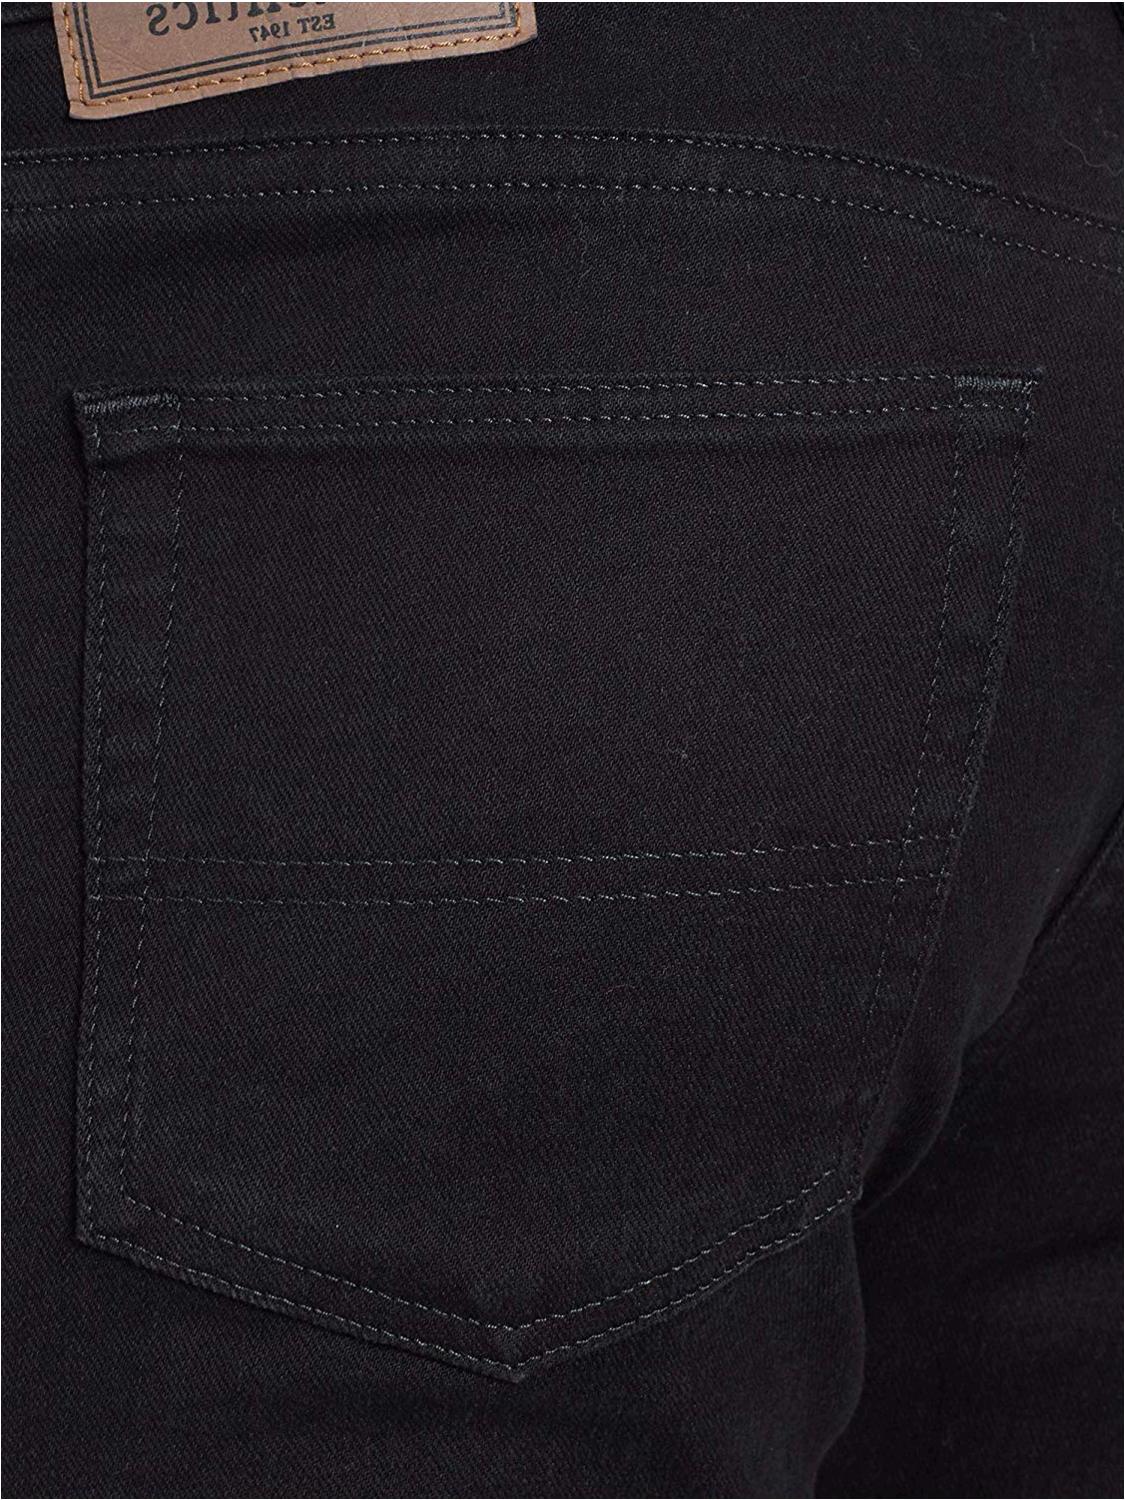 Wrangler Authentics Men's Classic 5-Pocket Relaxed, Black Flex, Size ...